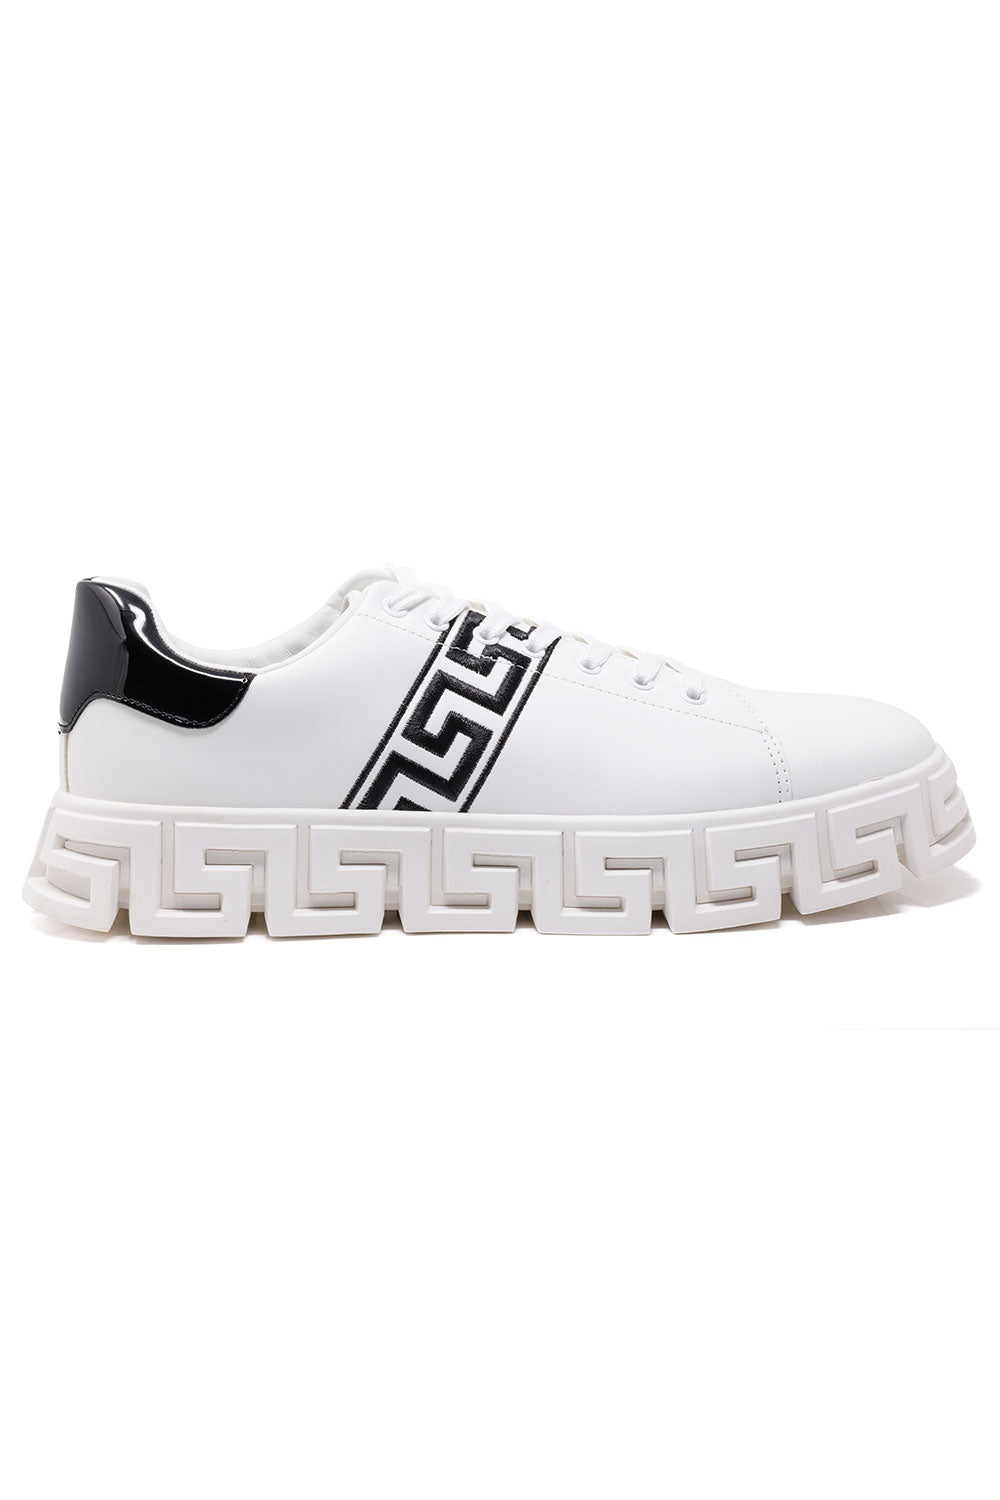 Barabas Men's Greek Key Sole Pattern Premium Sneakers 4SK07 White